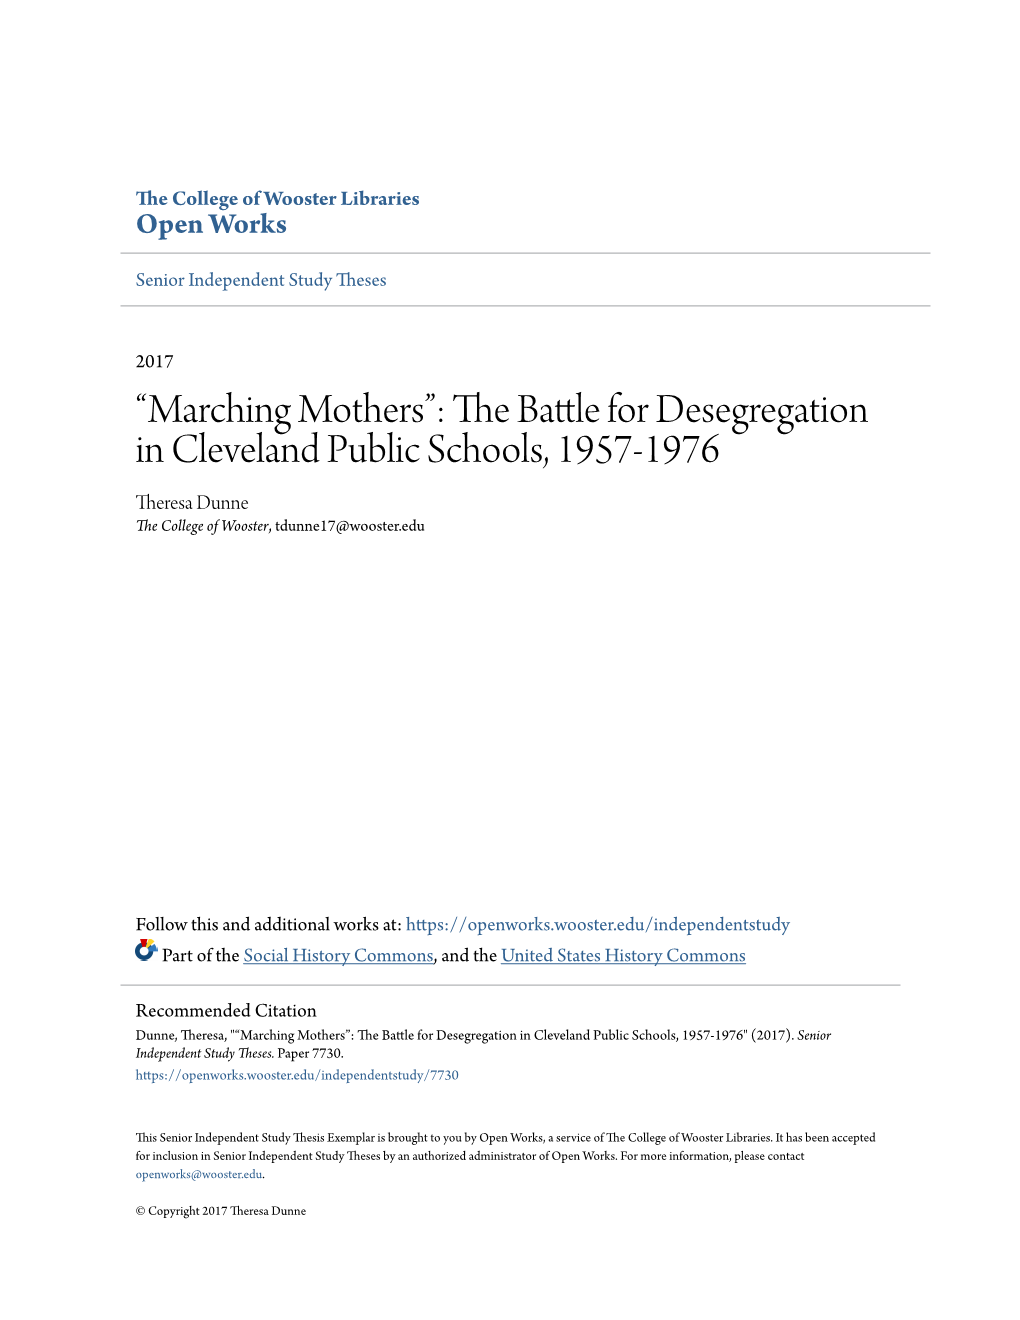 The Battle for Desegregation in Cleveland Public Schools, 1957-1976